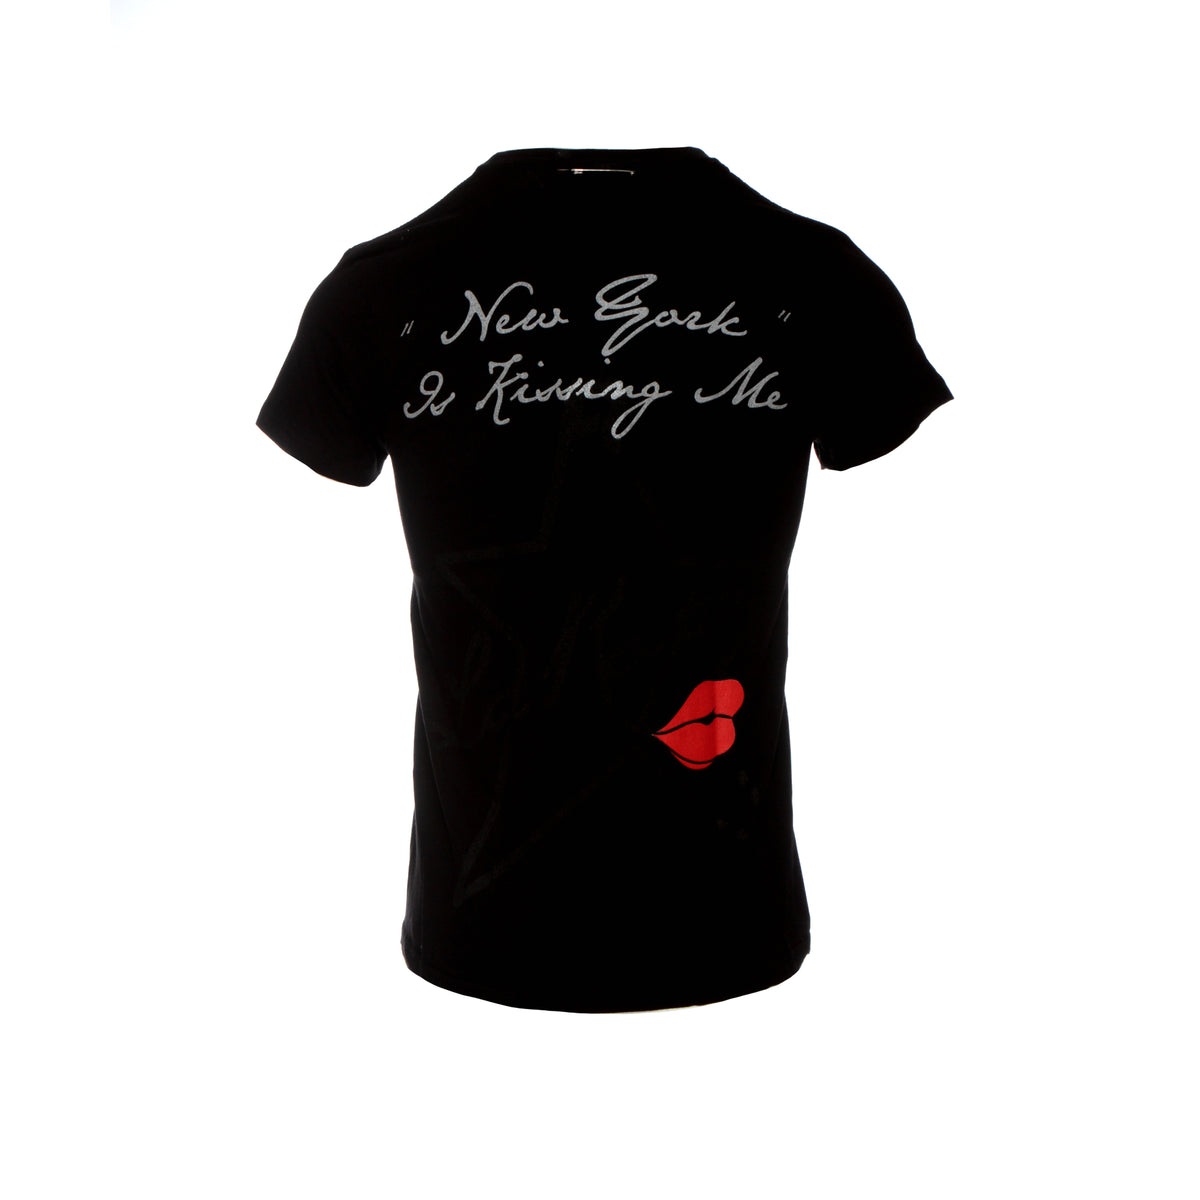 La Ropa New York Is Kissing Me Men's SS T-Shirt Black